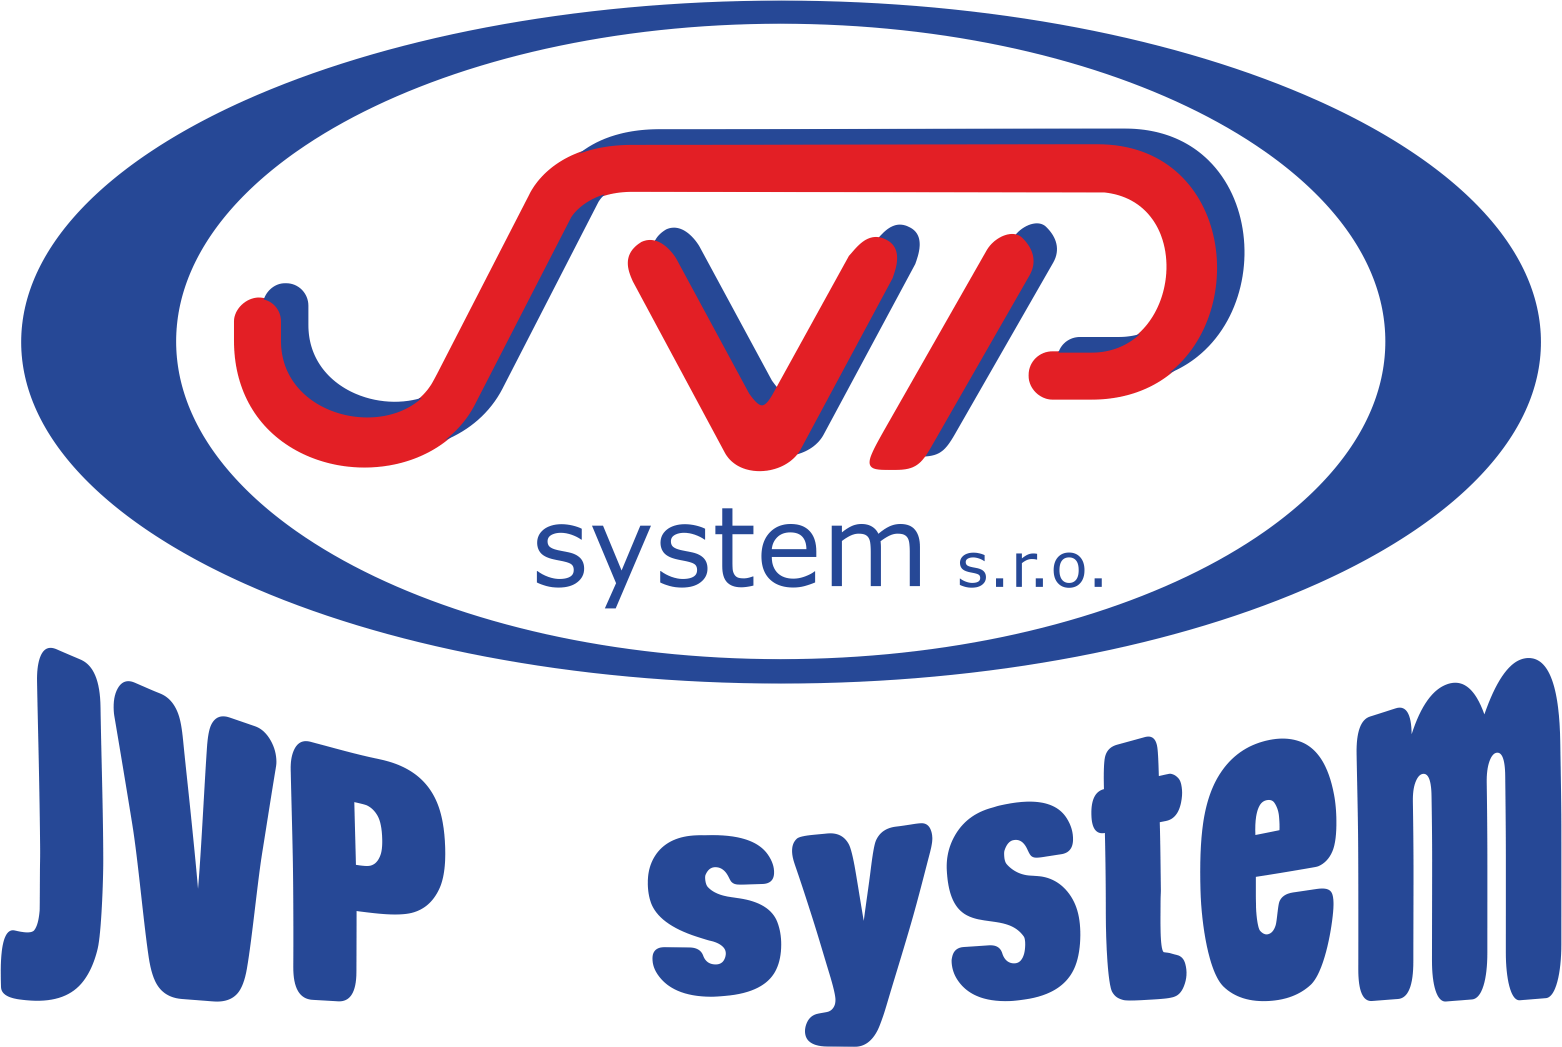 JVP system s.r.o.